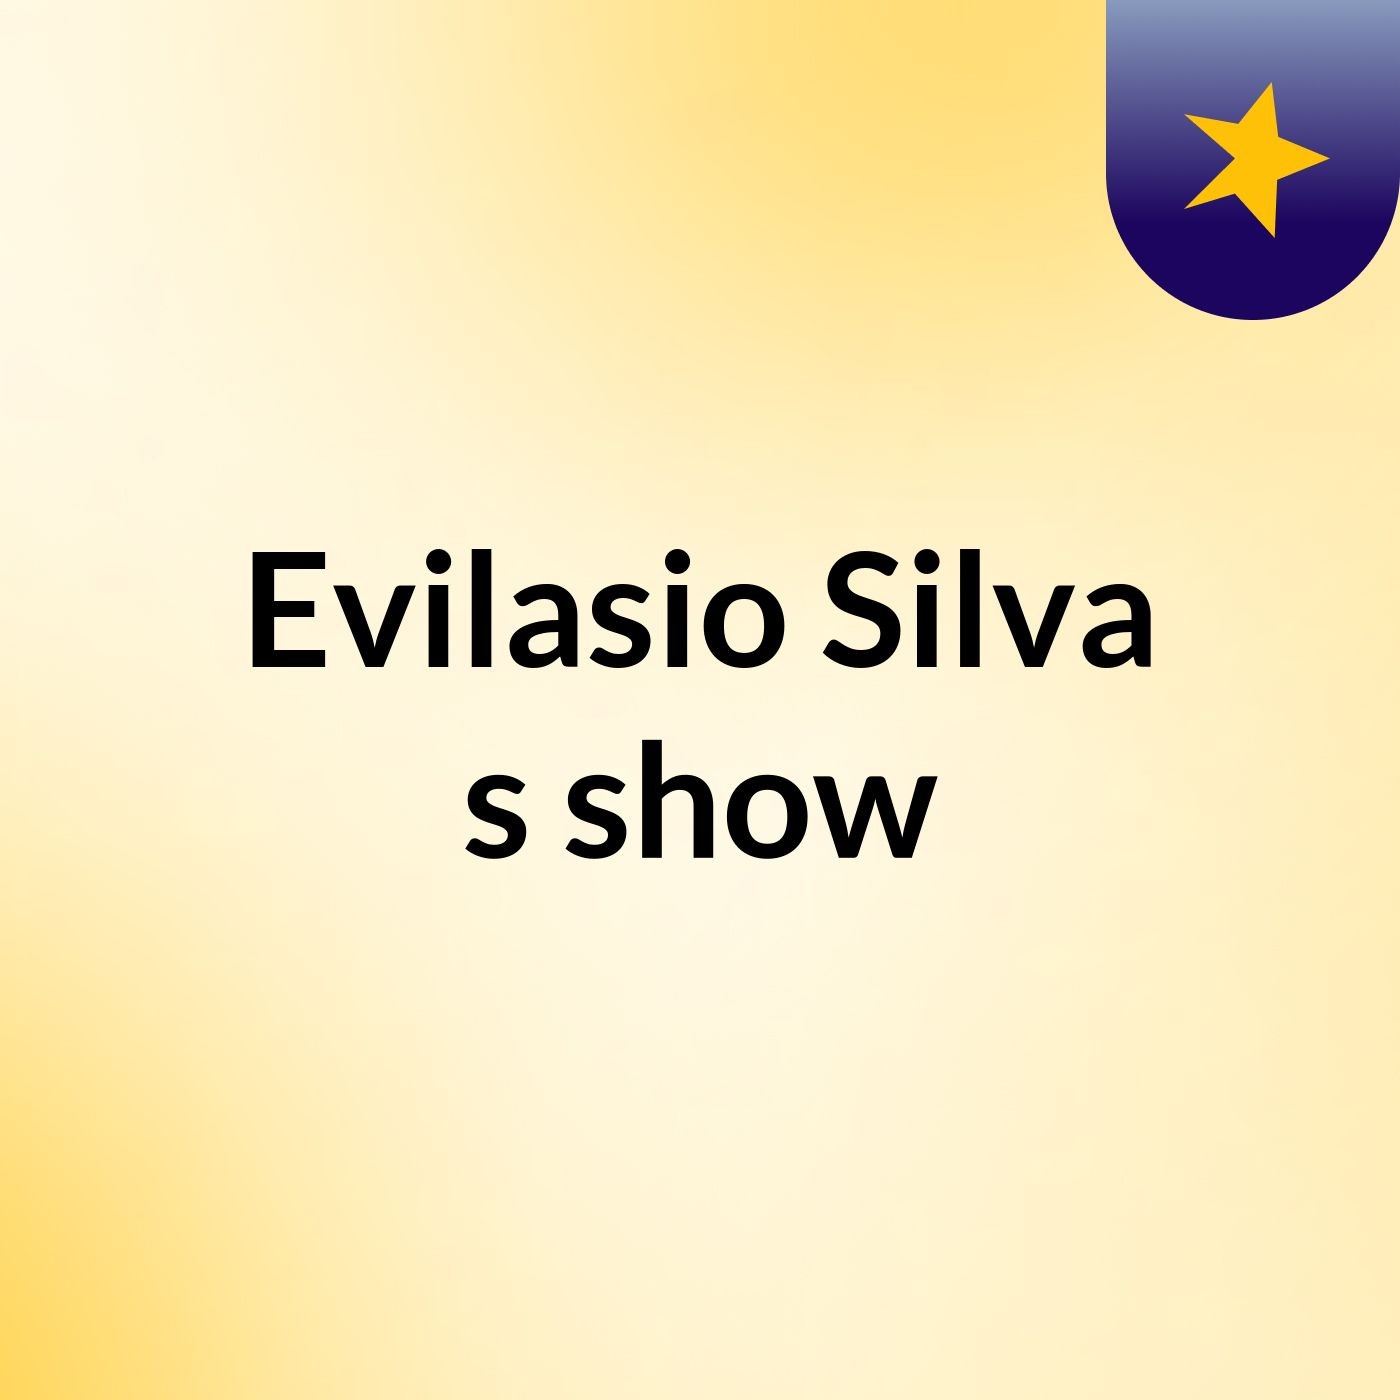 Evilasio Silva's show